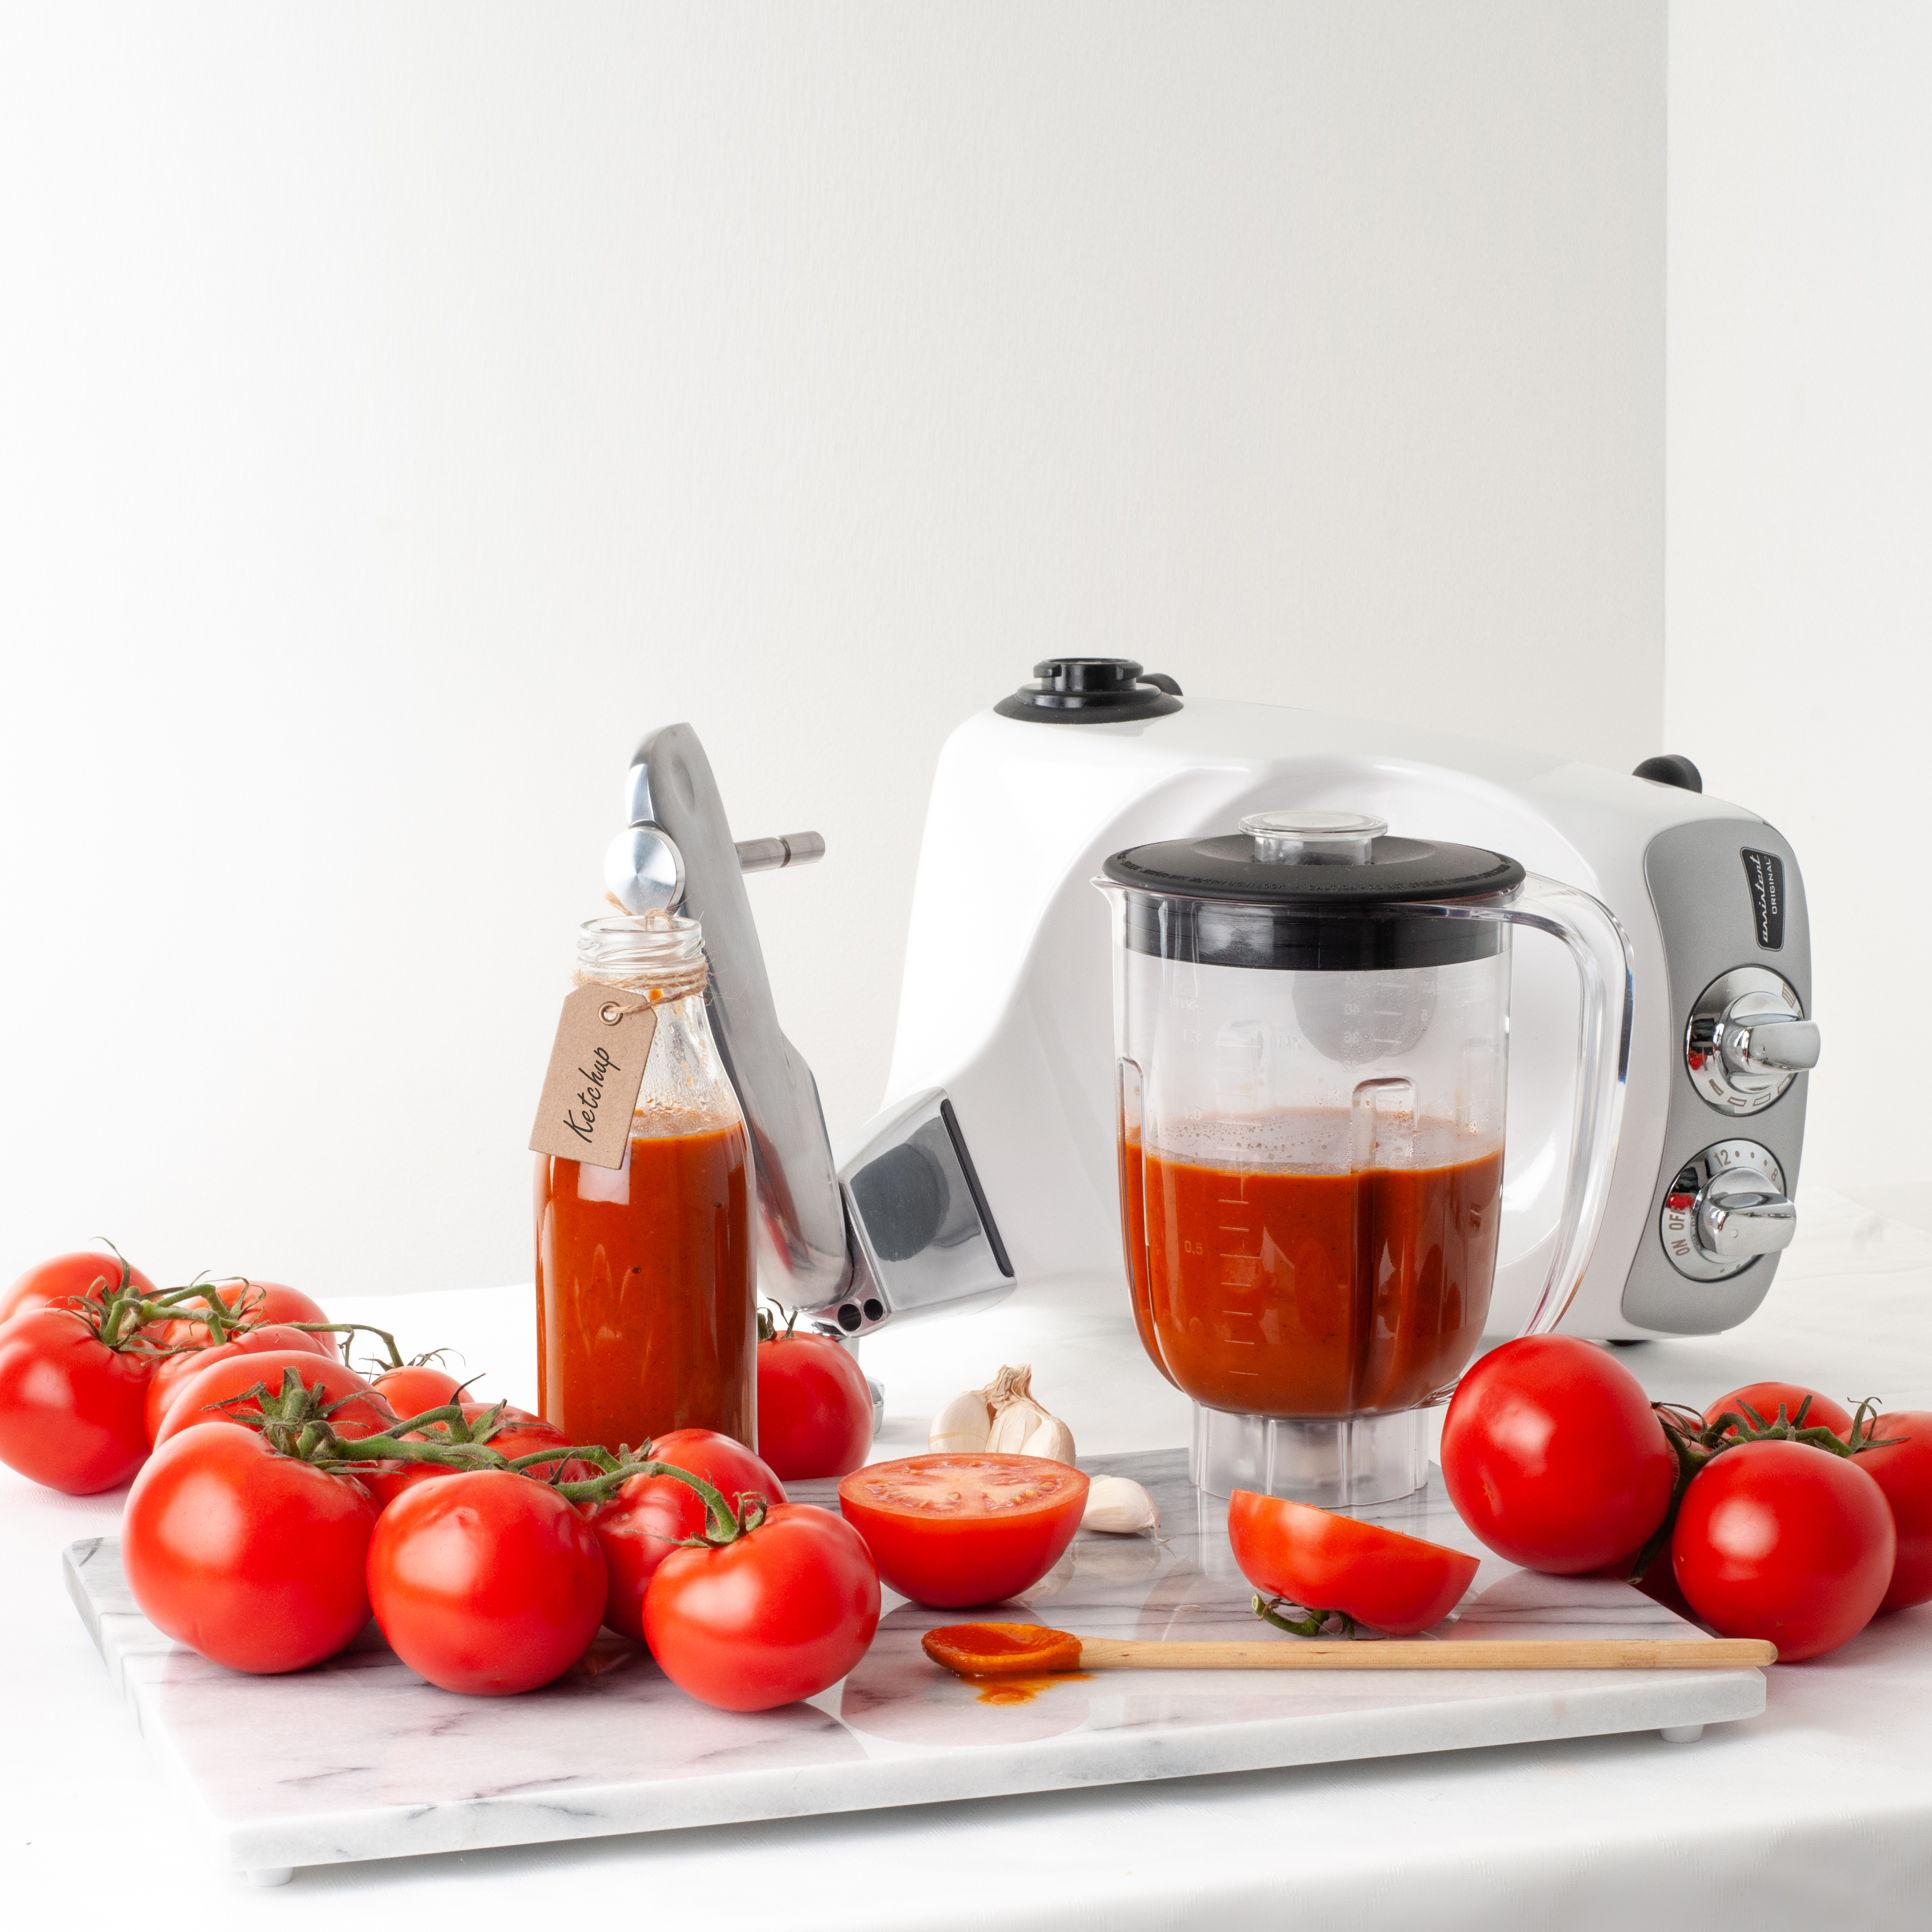 Homemade ketchup with Ankarsrum stand mixer